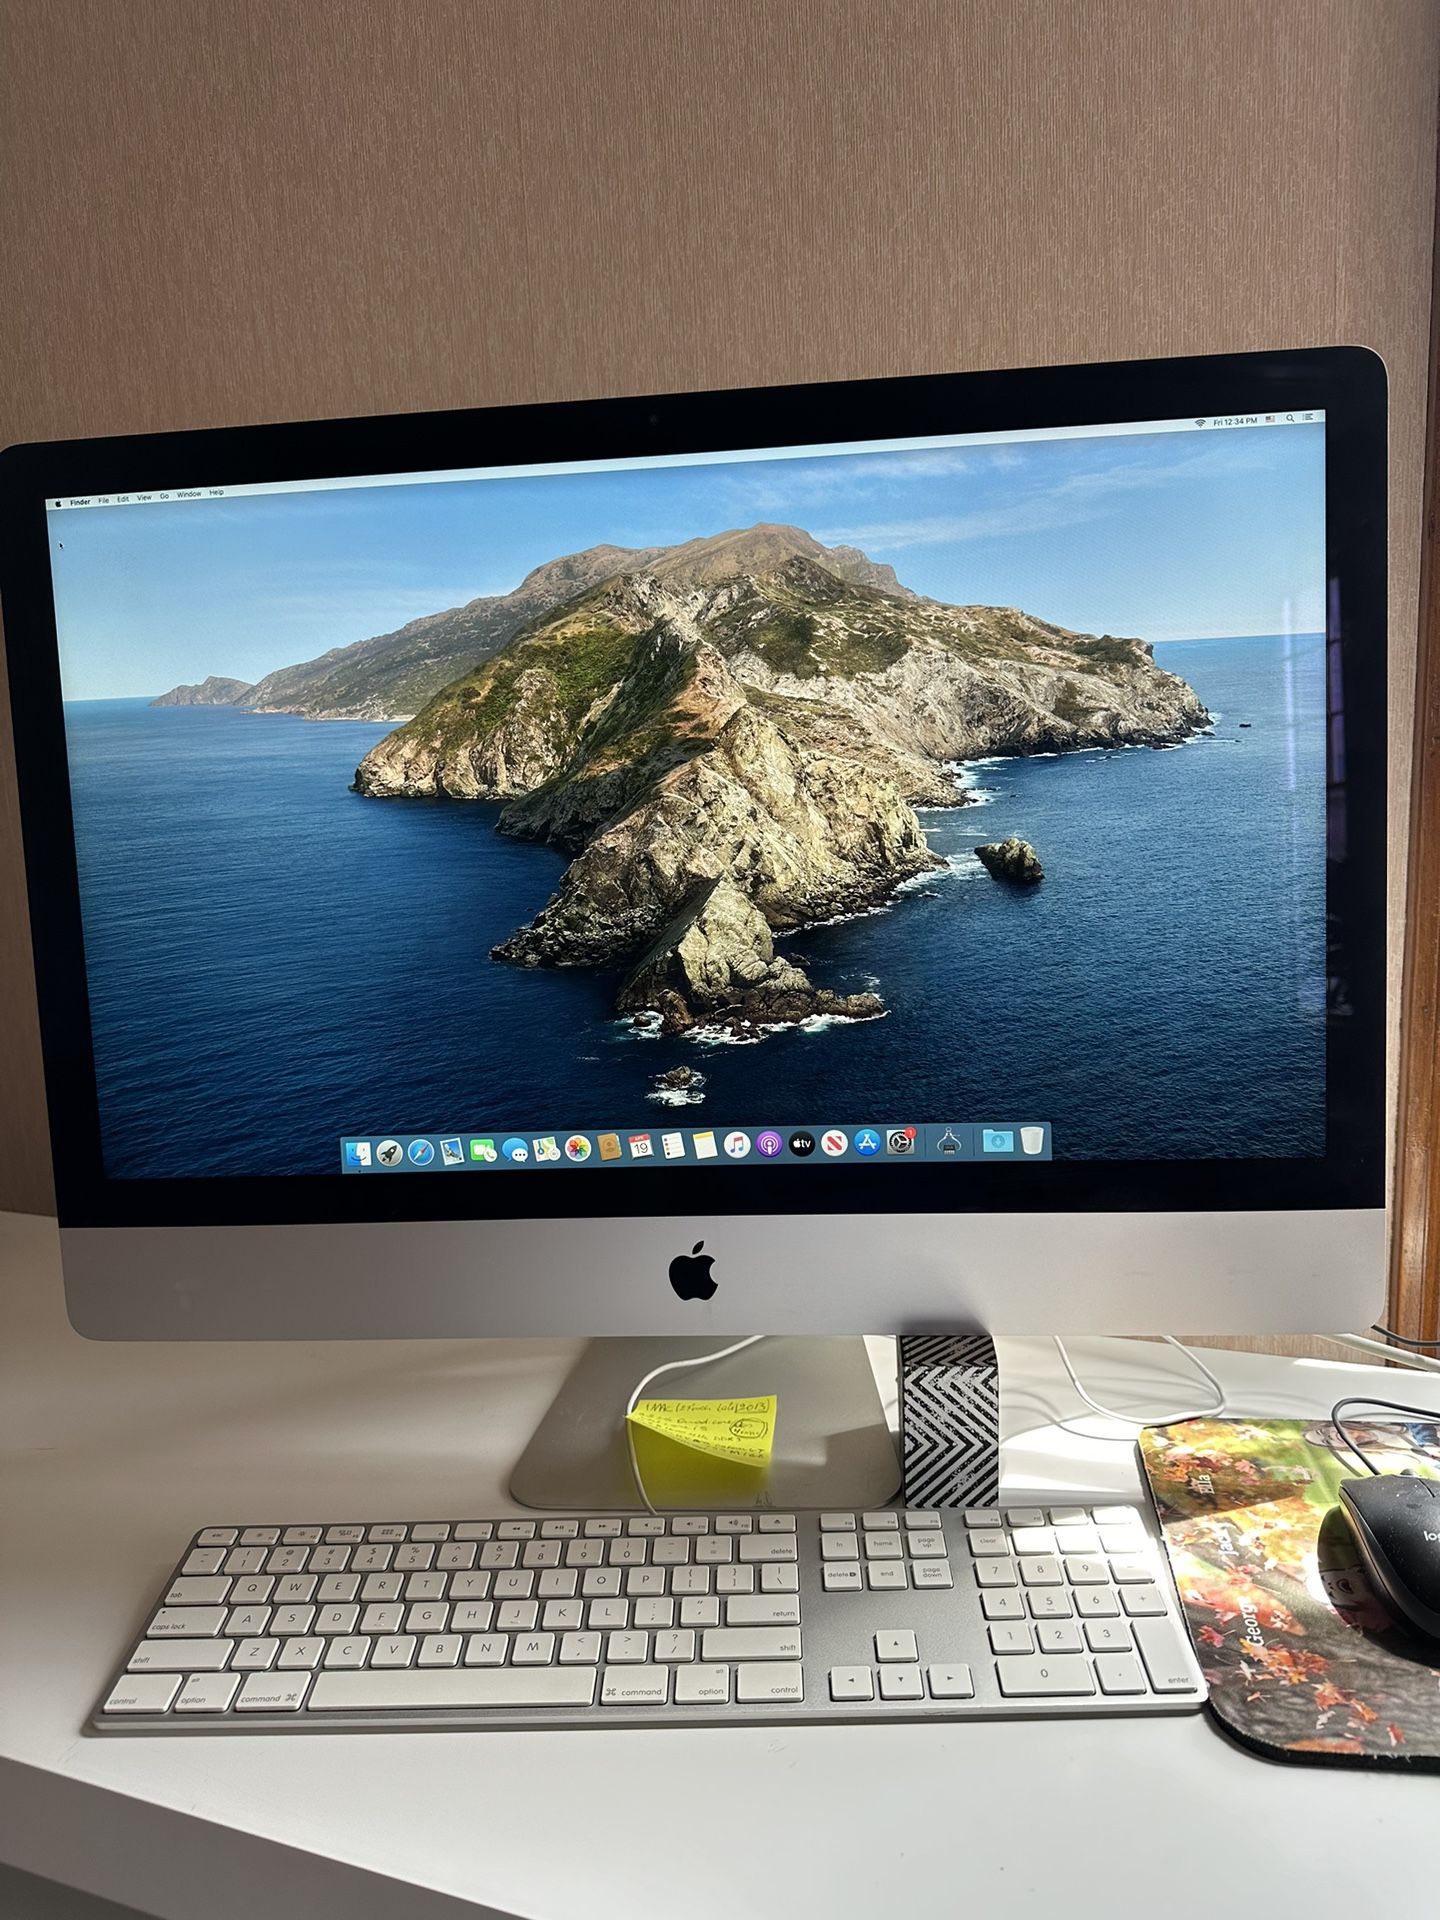 Apple iMac 27" Late 2013 3.2GHz Core i5 8GB 1TB 